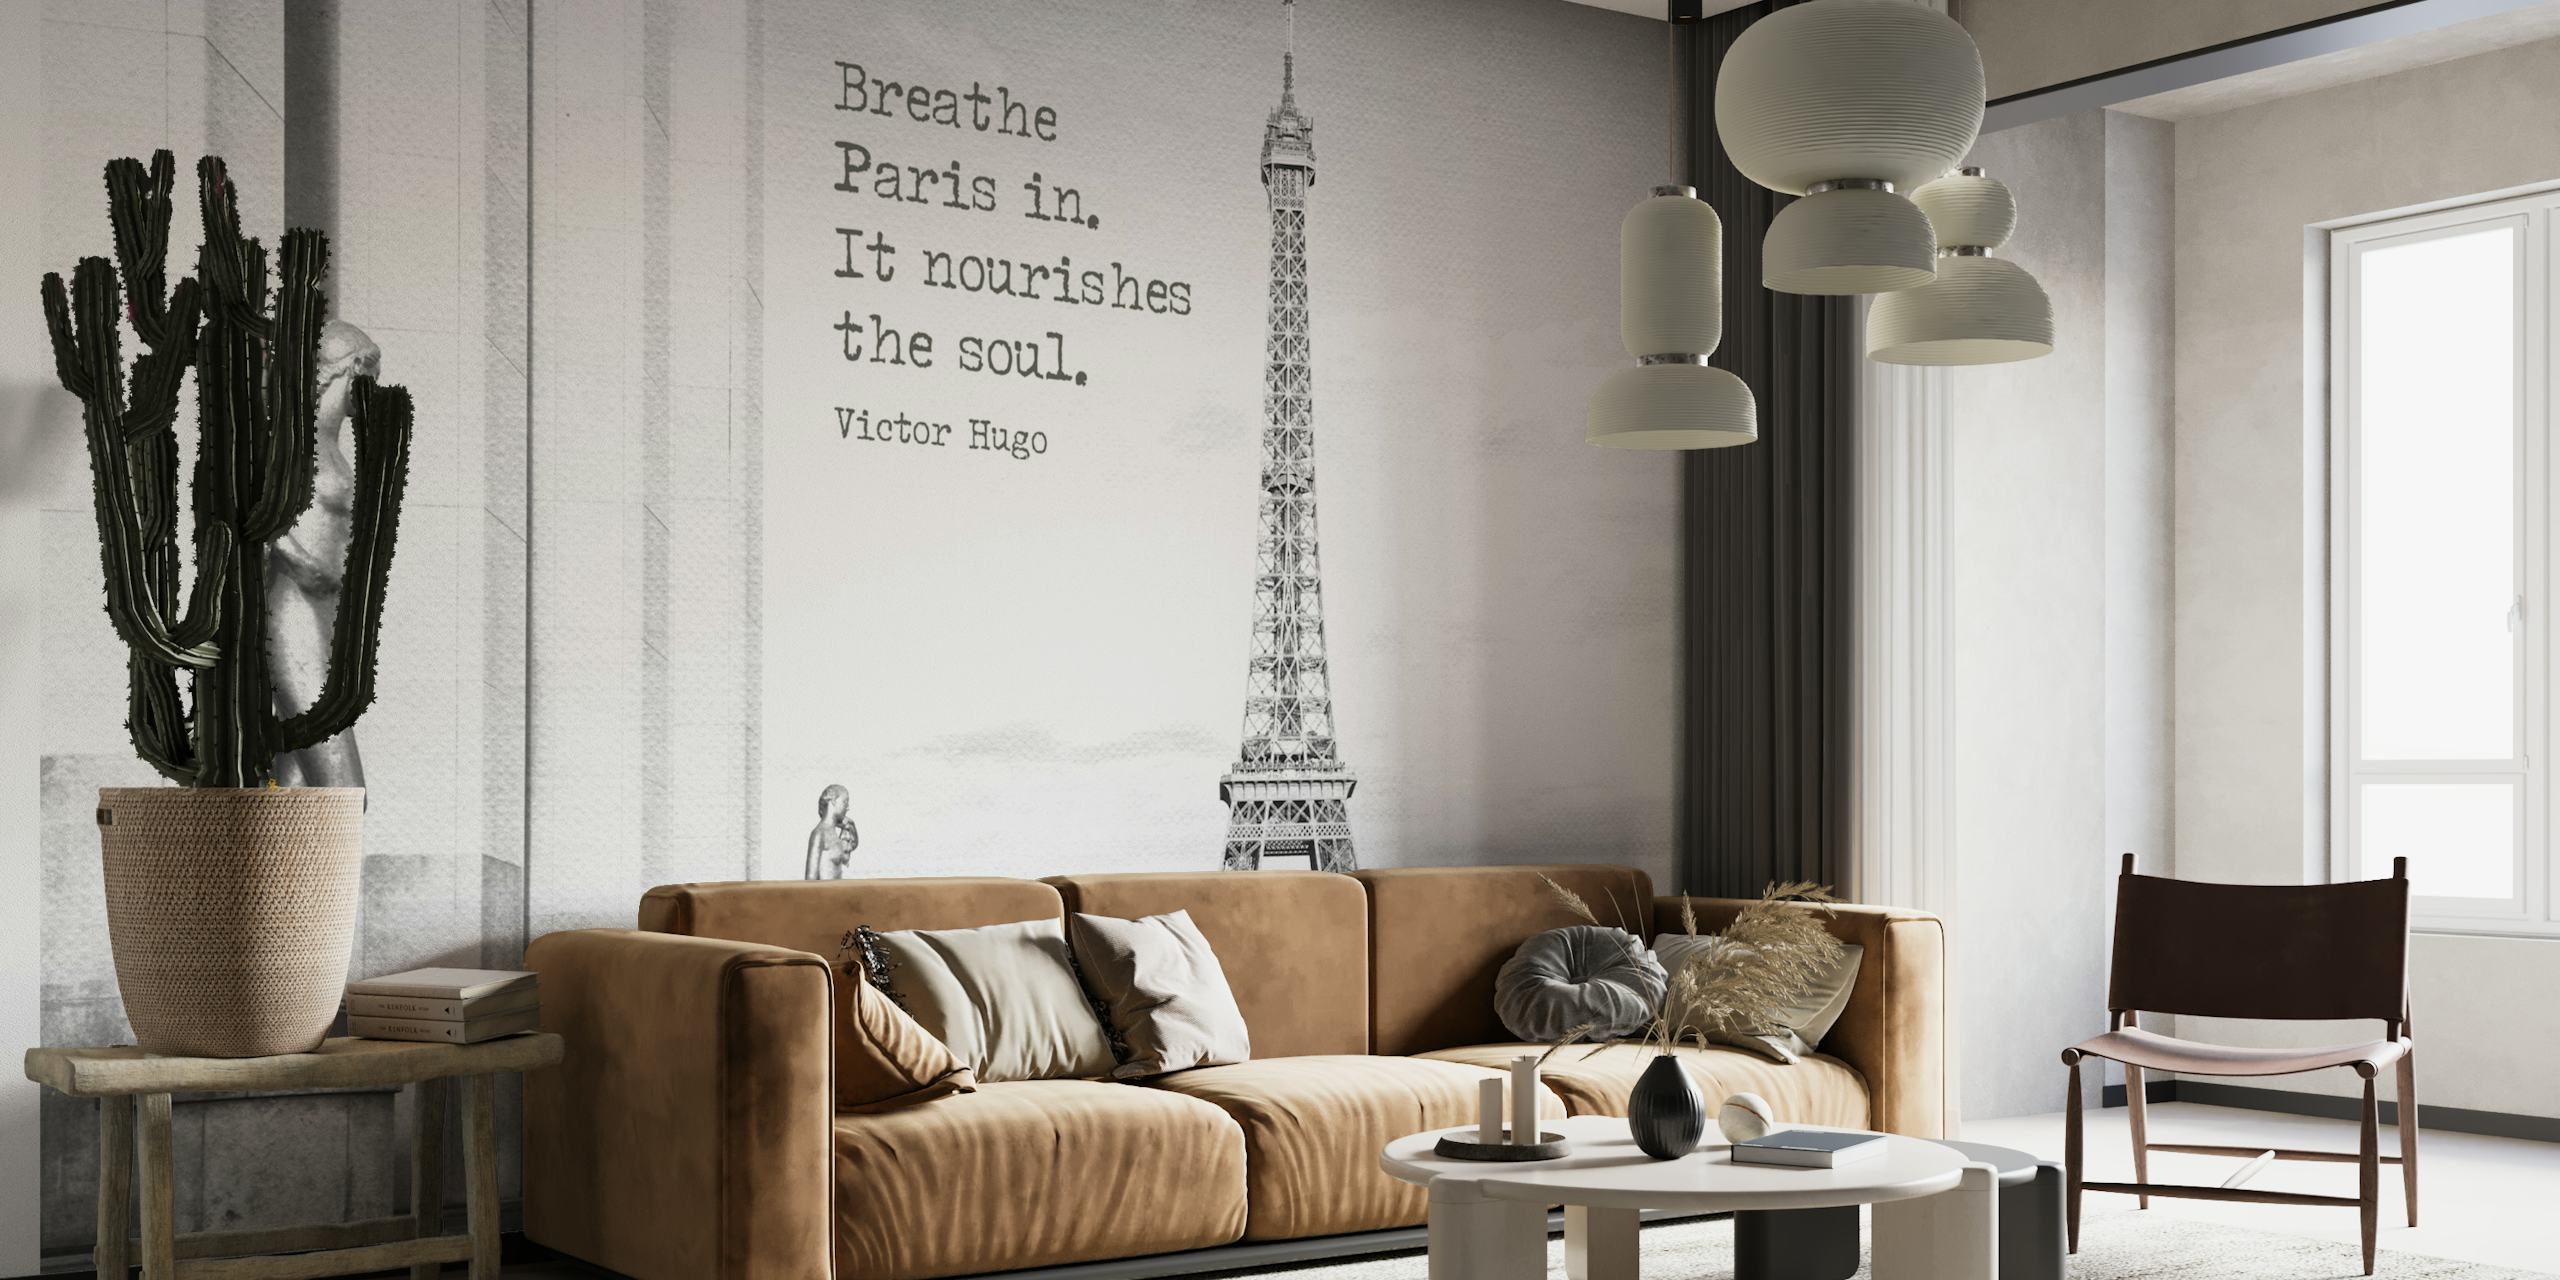 Breathe Paris in papel de parede